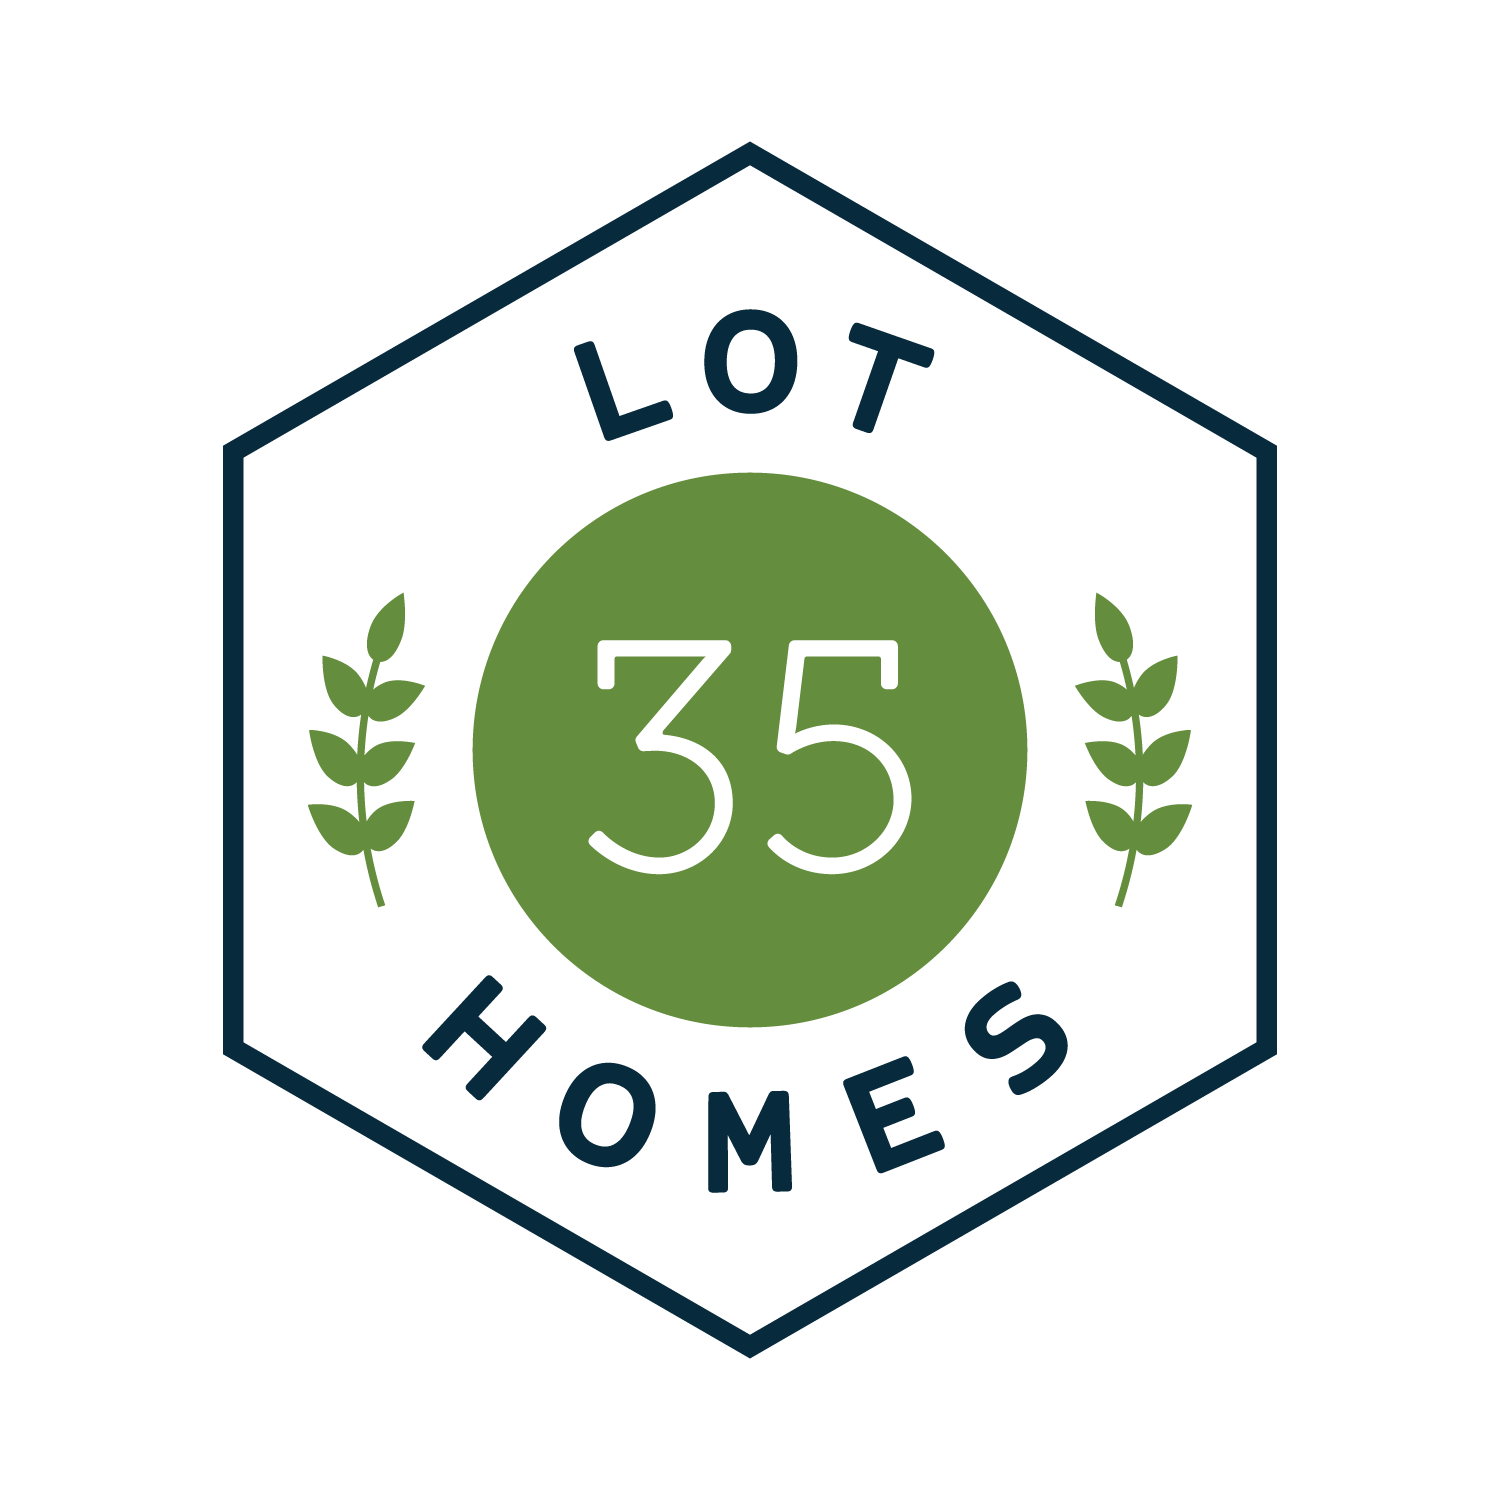 Lot 35 Homes